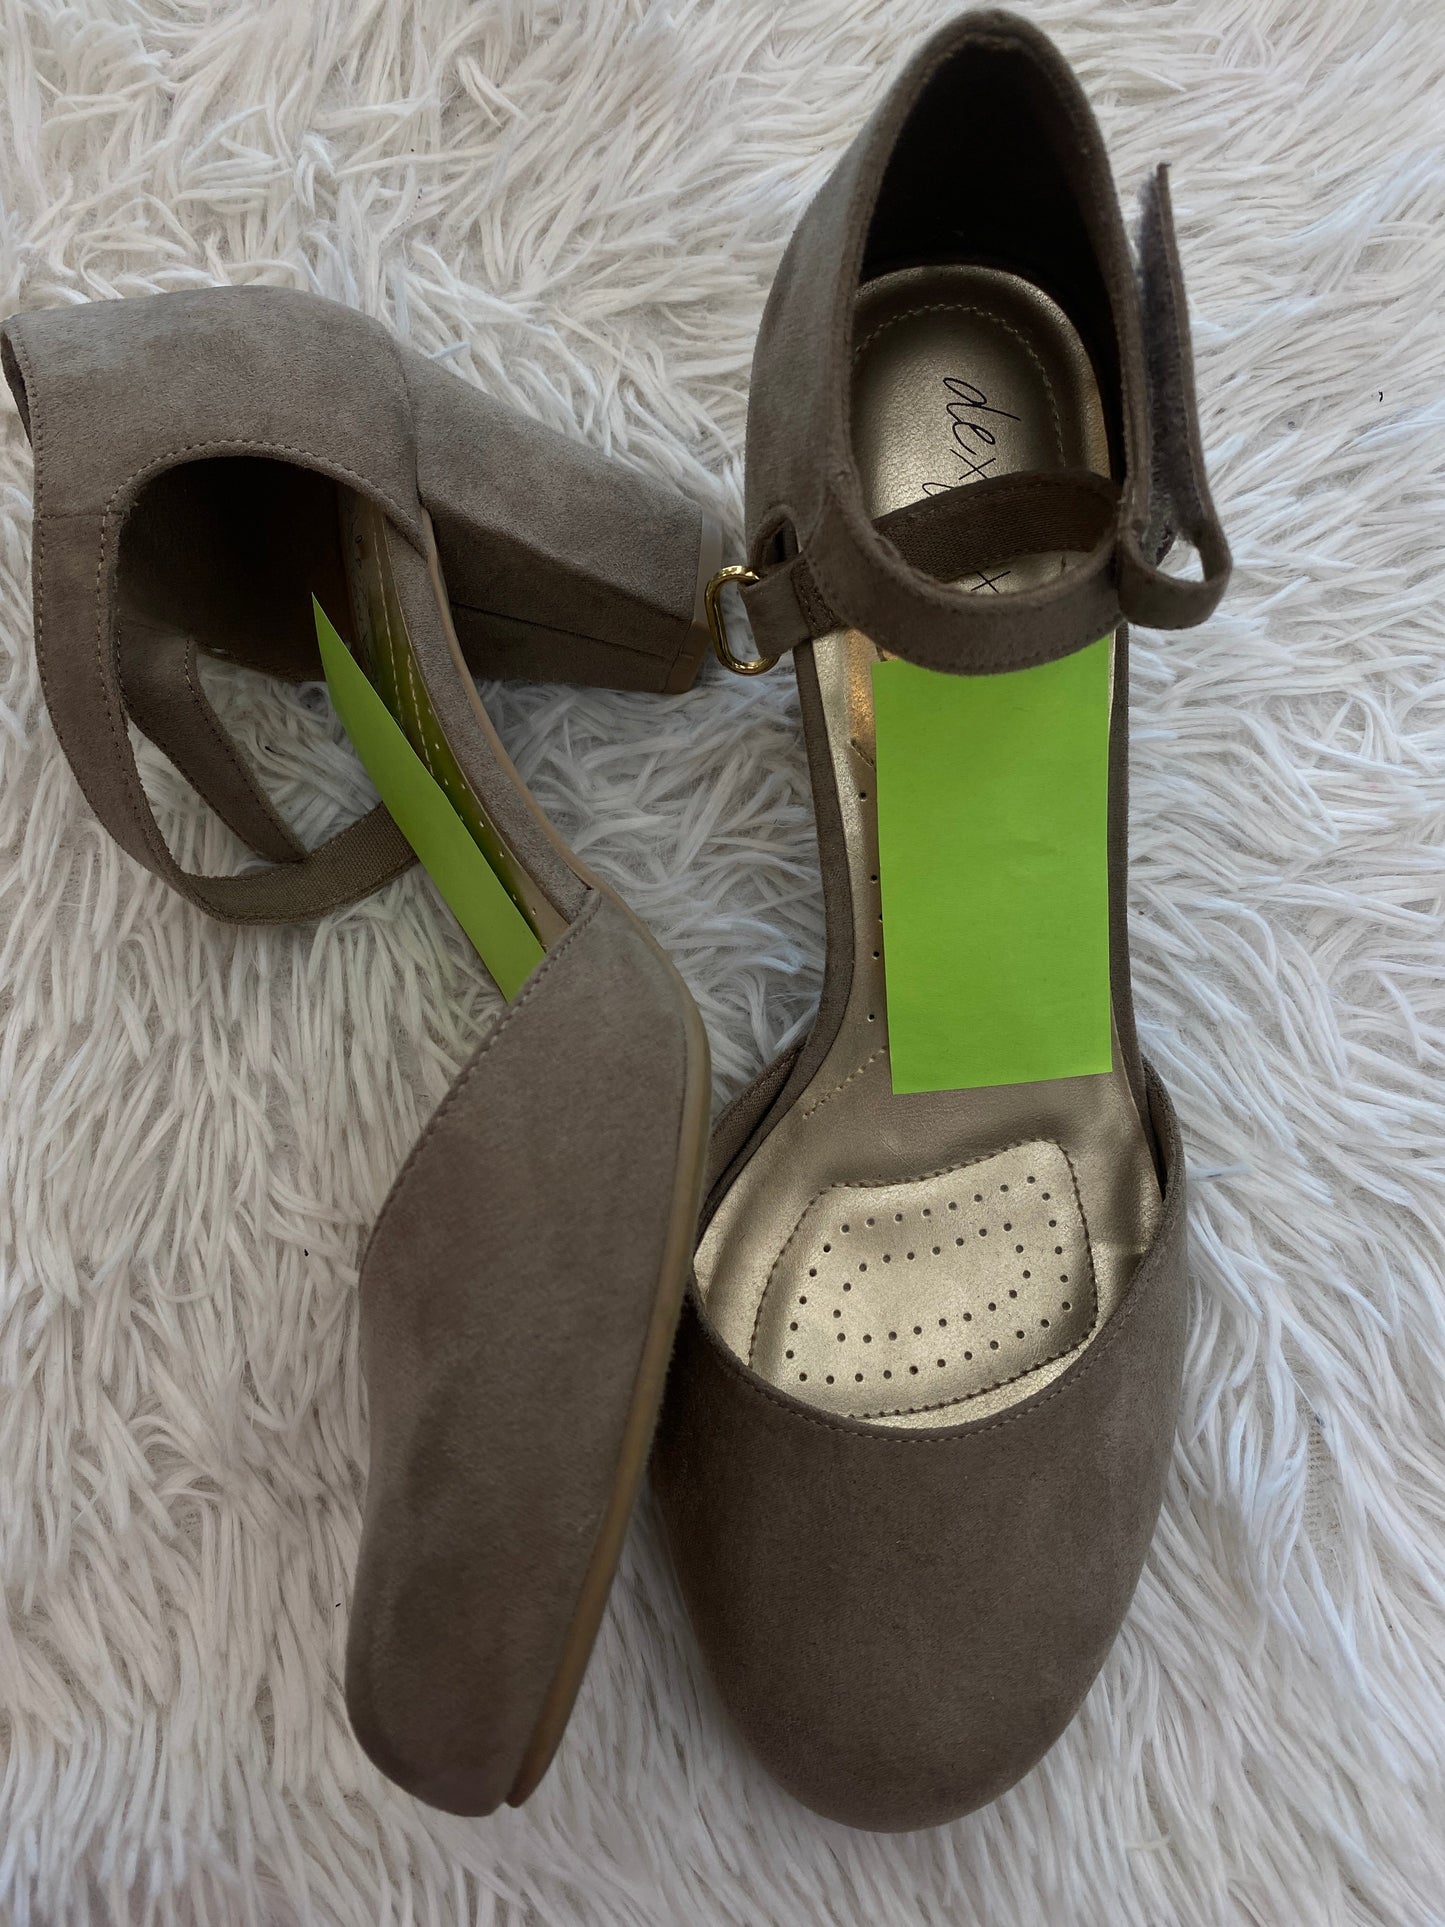 Azure Shoes Heels Block Dexflex, Size 8.5